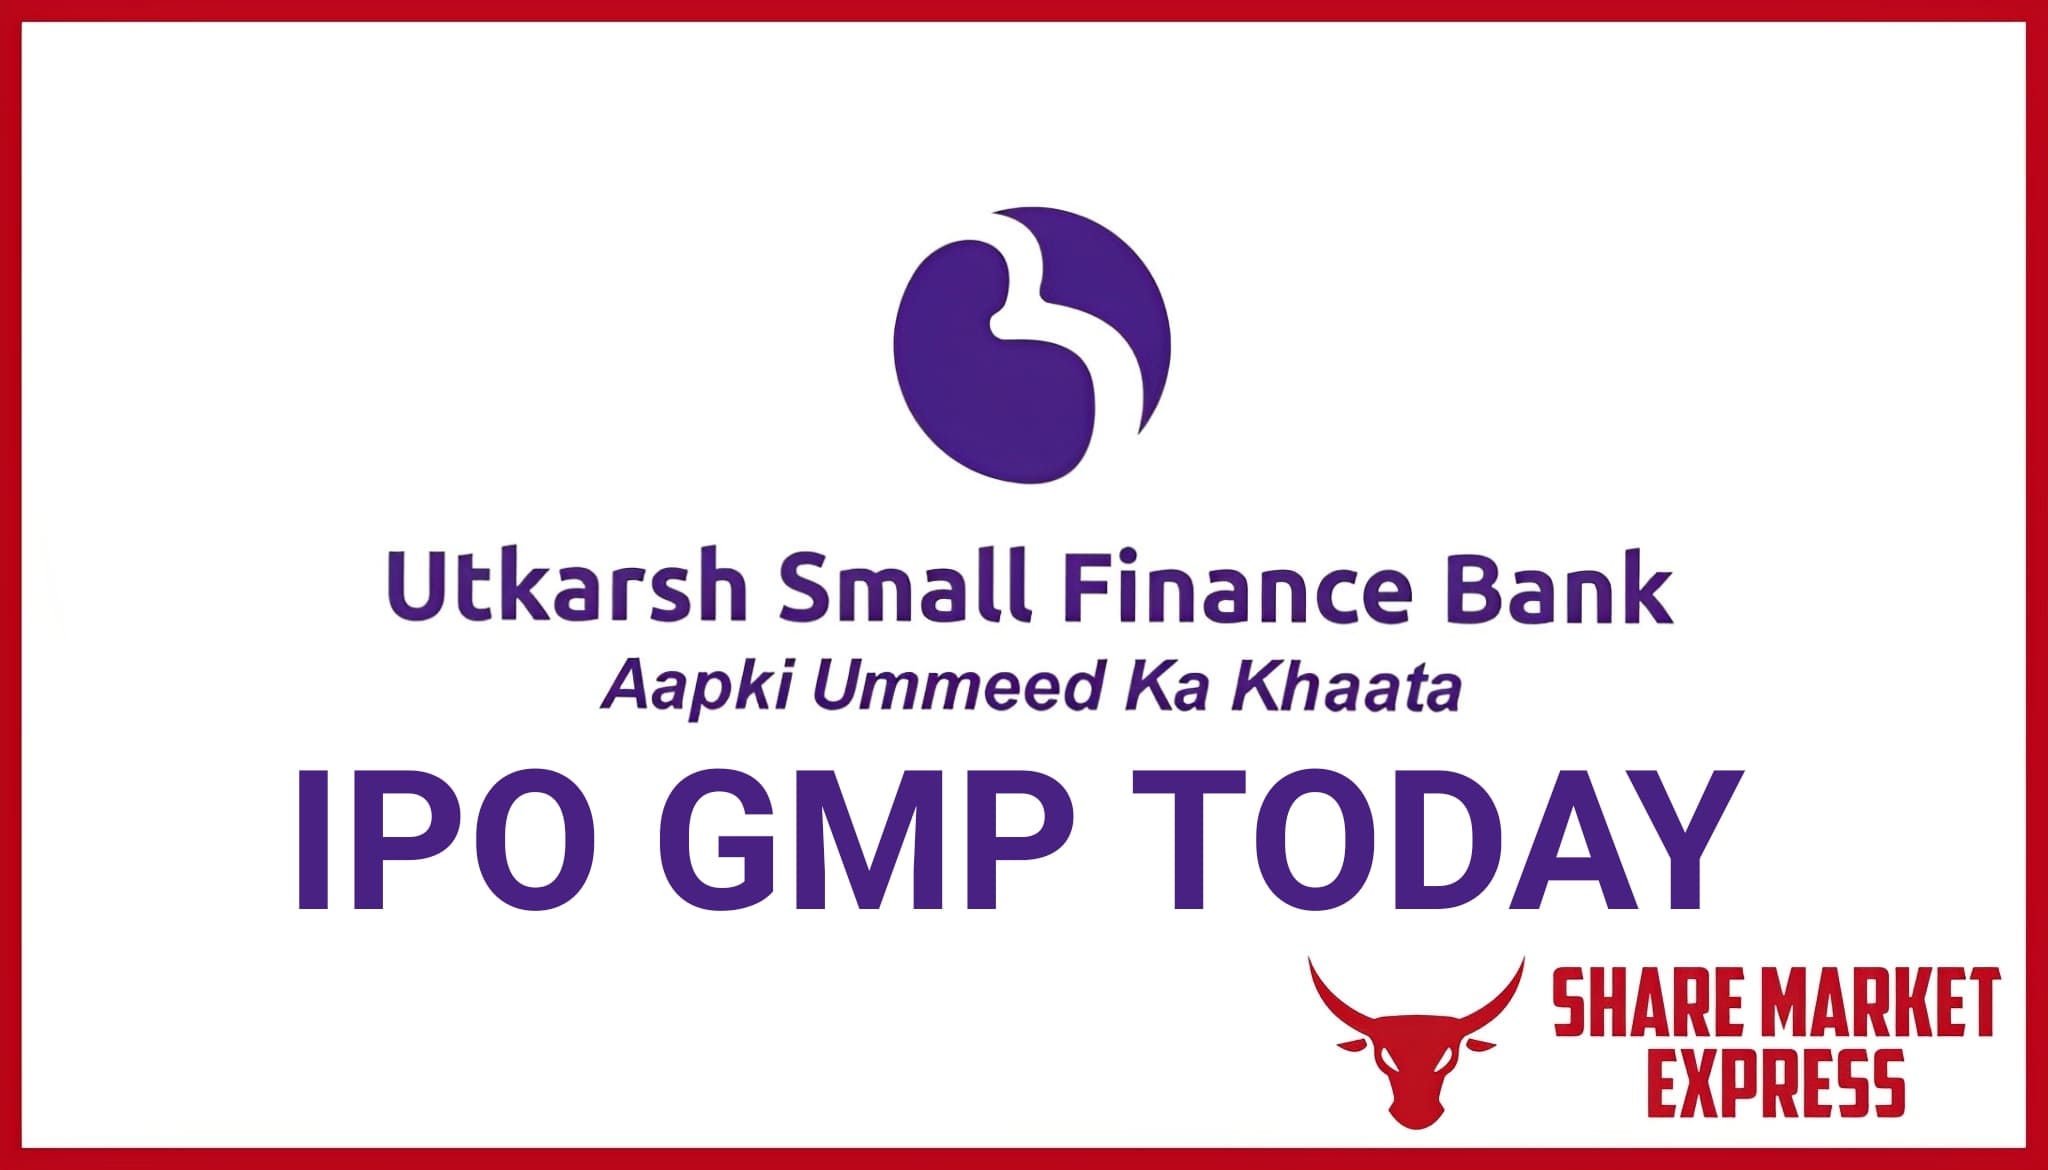 Utkarsh Small Finance Bank IPO GMP Today